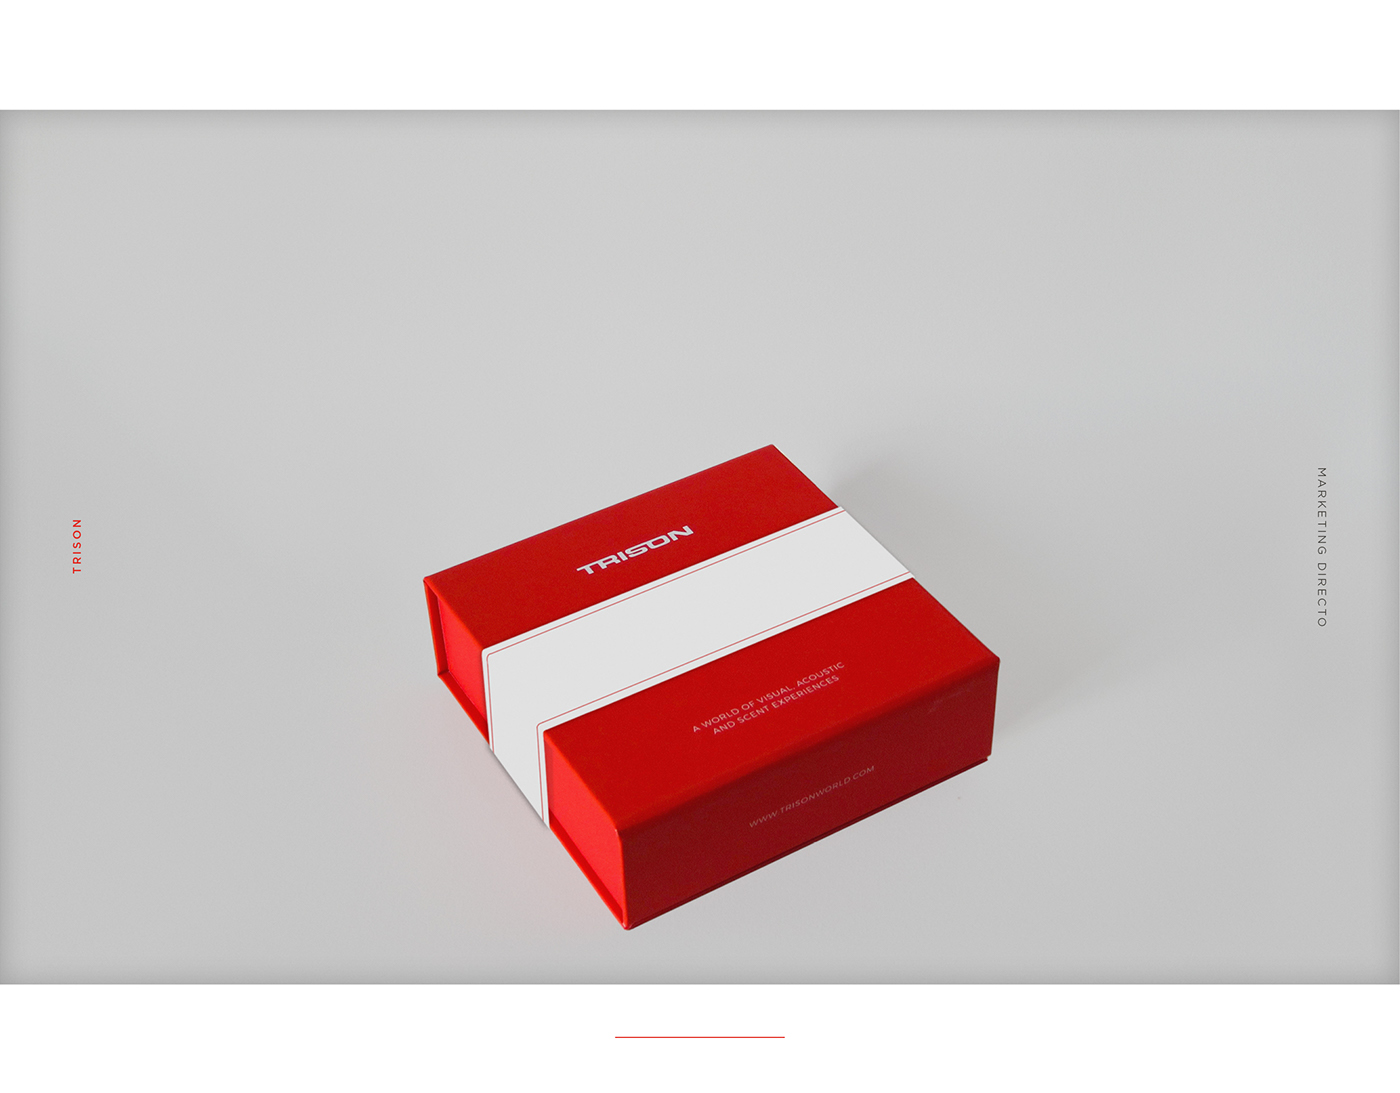 marketing   Packaging visual design design graphic design  trison direct marketing